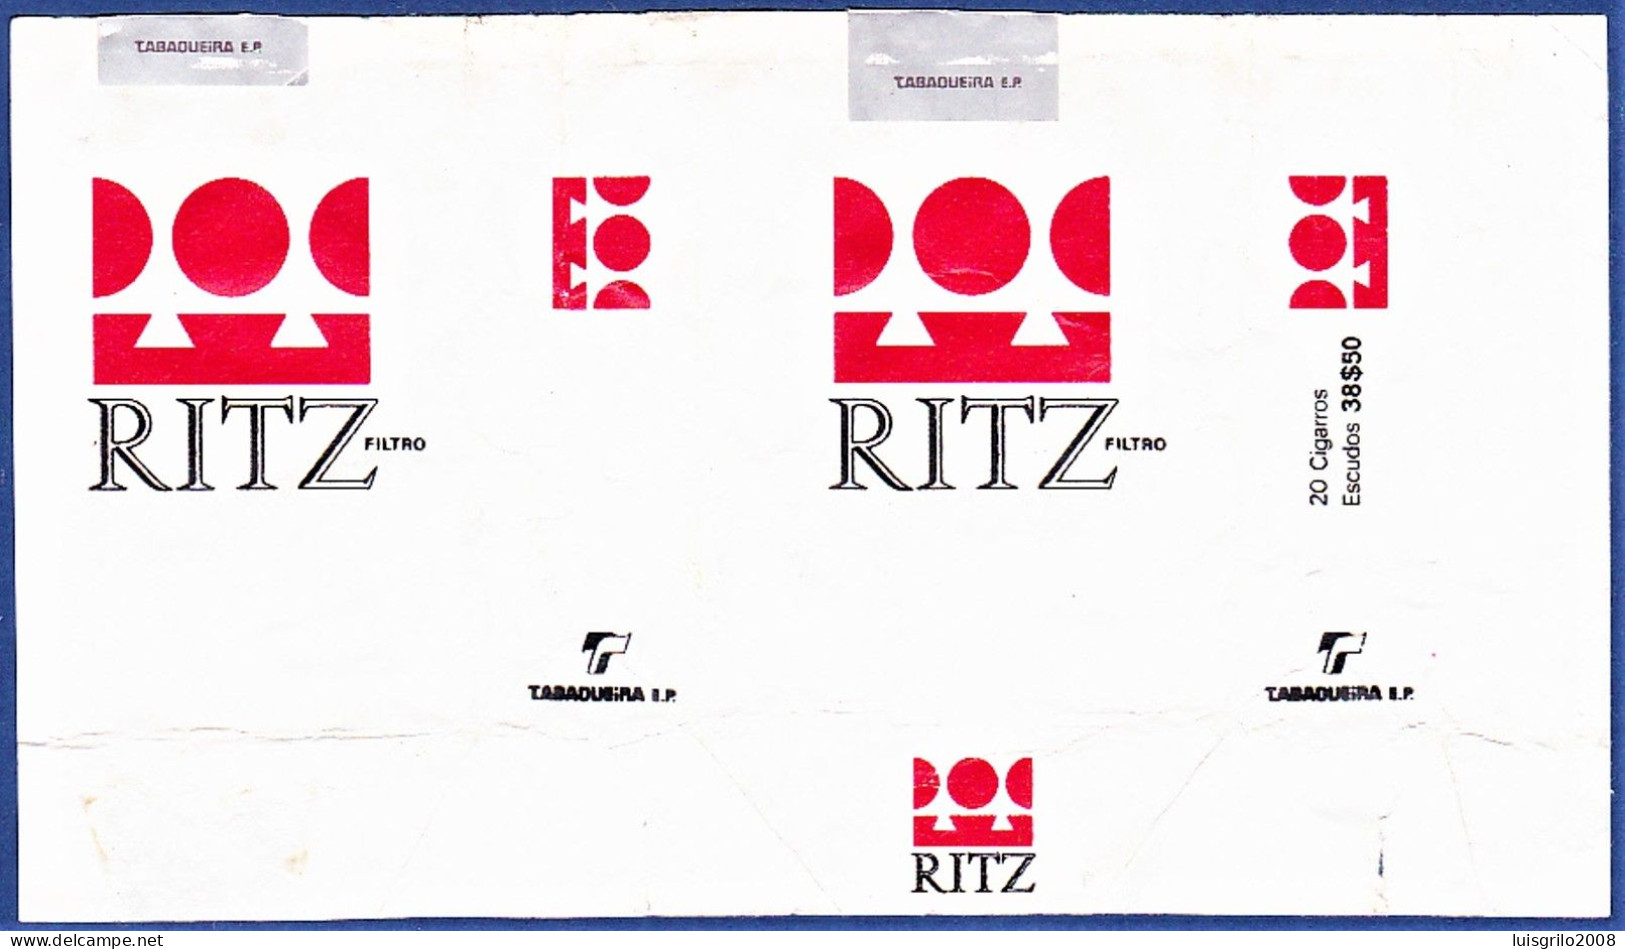 Portugal 1960/ 70, Pack Of Cigarettes - RITZ Filtro -|- A Tabaqueira E.P., Lisboa - Empty Tobacco Boxes